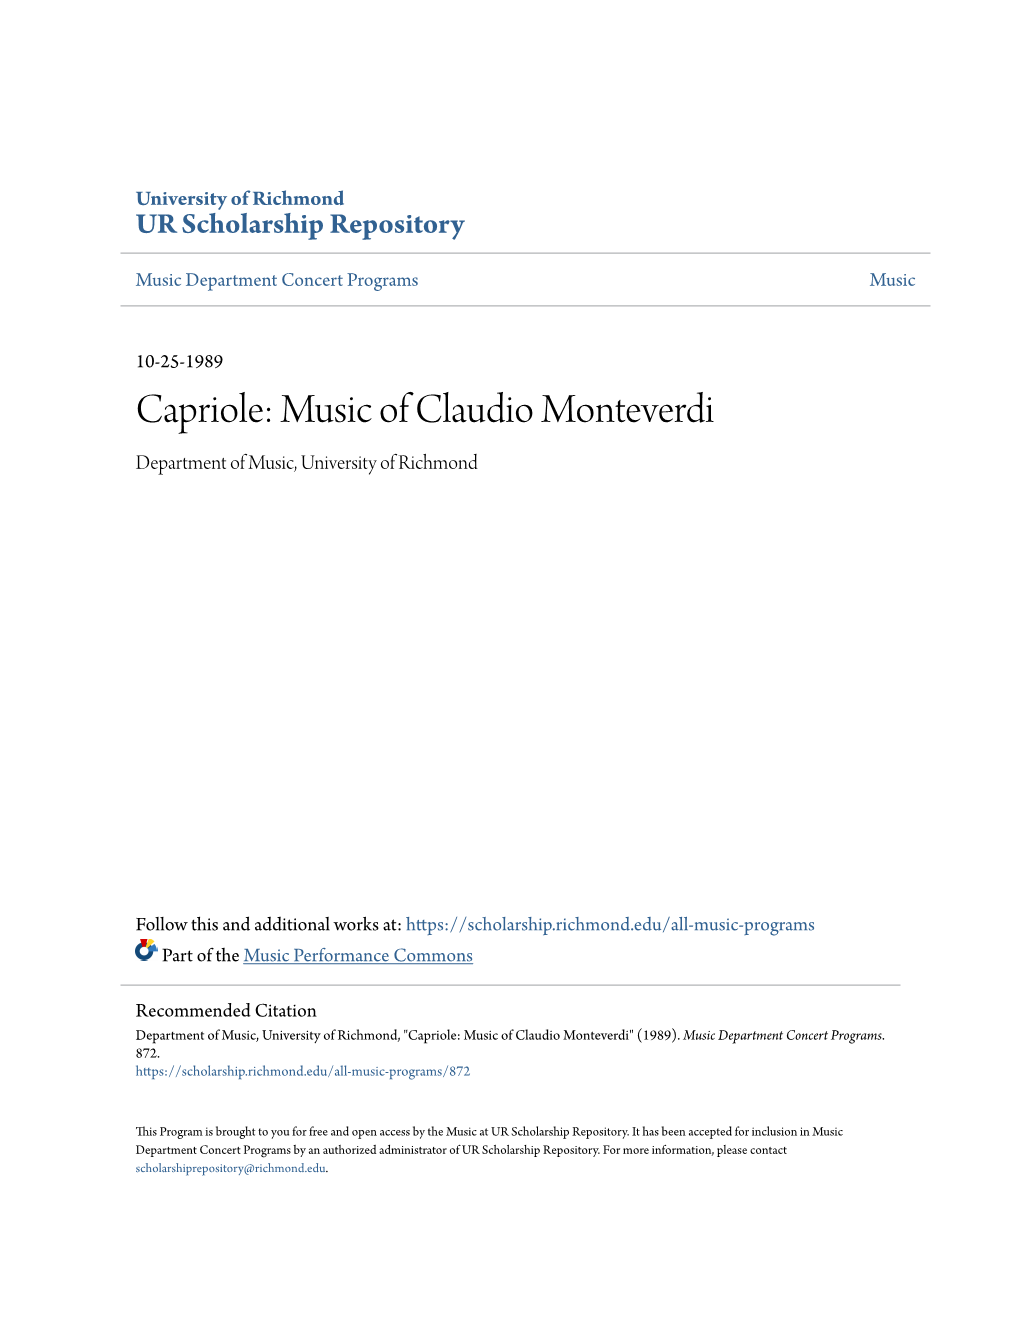 Music of Claudio Monteverdi Department of Music, University of Richmond